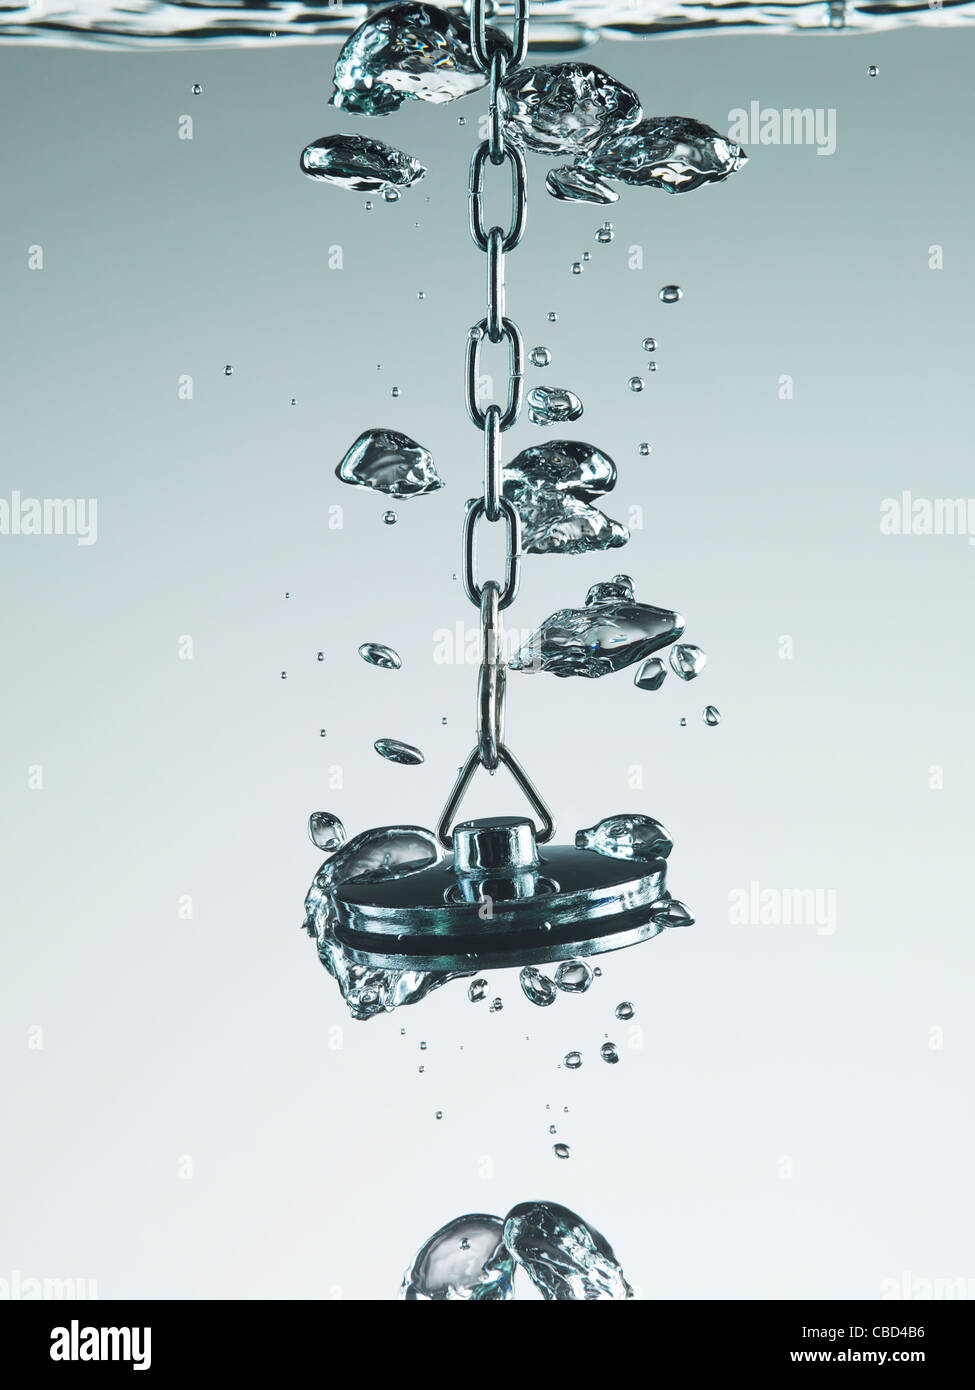 Plug bubbling in water Stock Photo